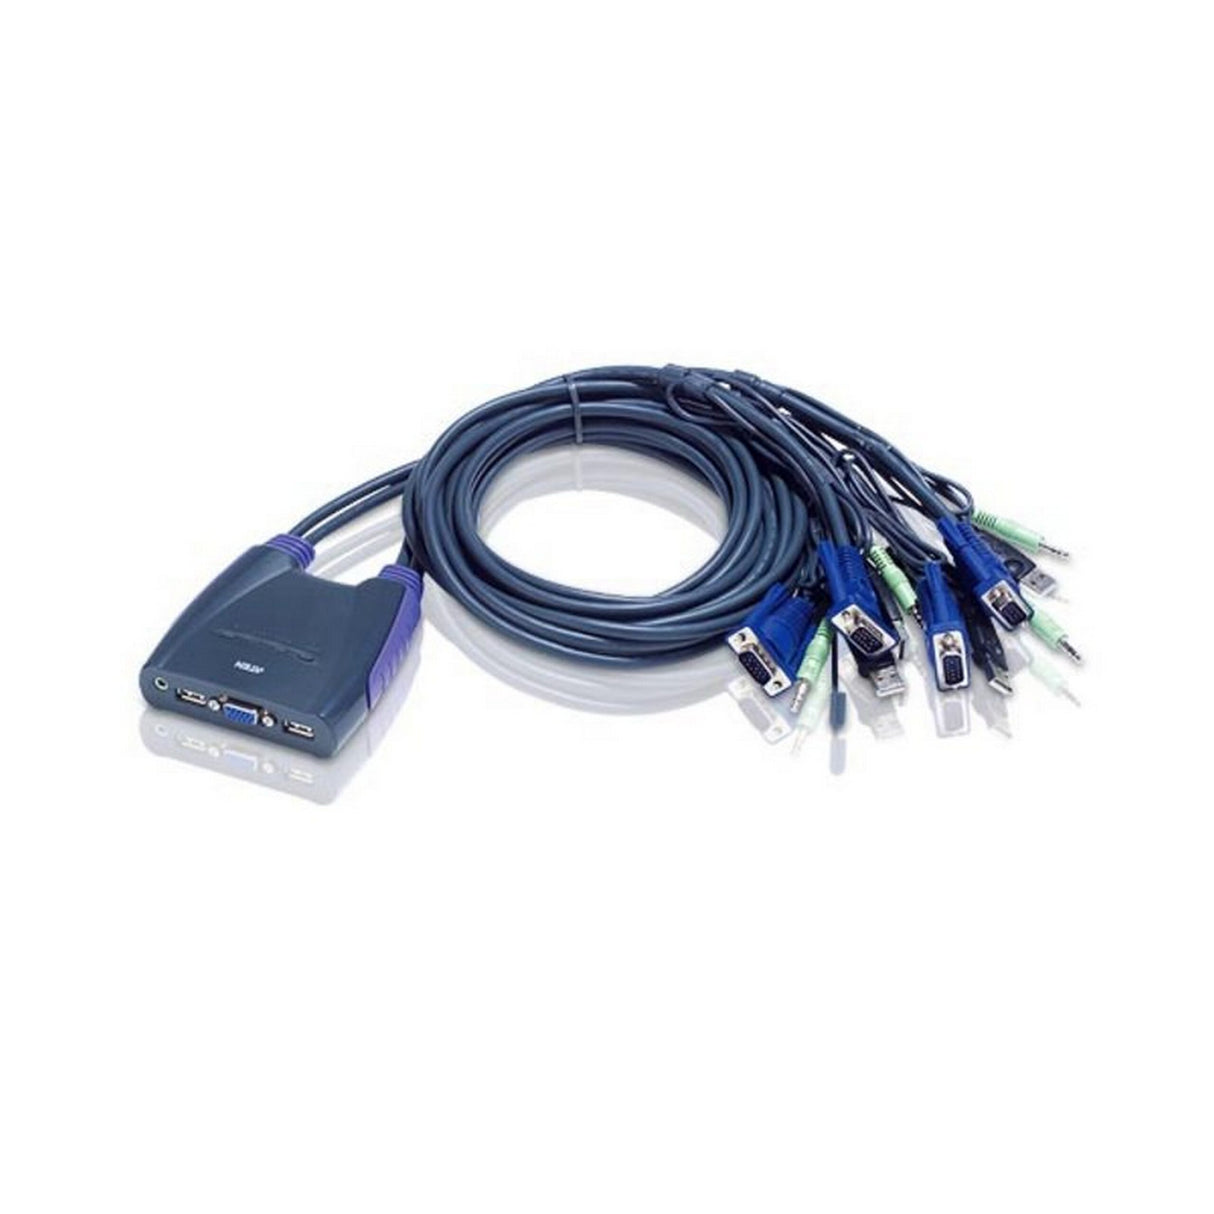 ATEN CS64US 4-Port USB VGA/Audio Cable KVM Switch, 0.9 Meters, 1.2 Meters